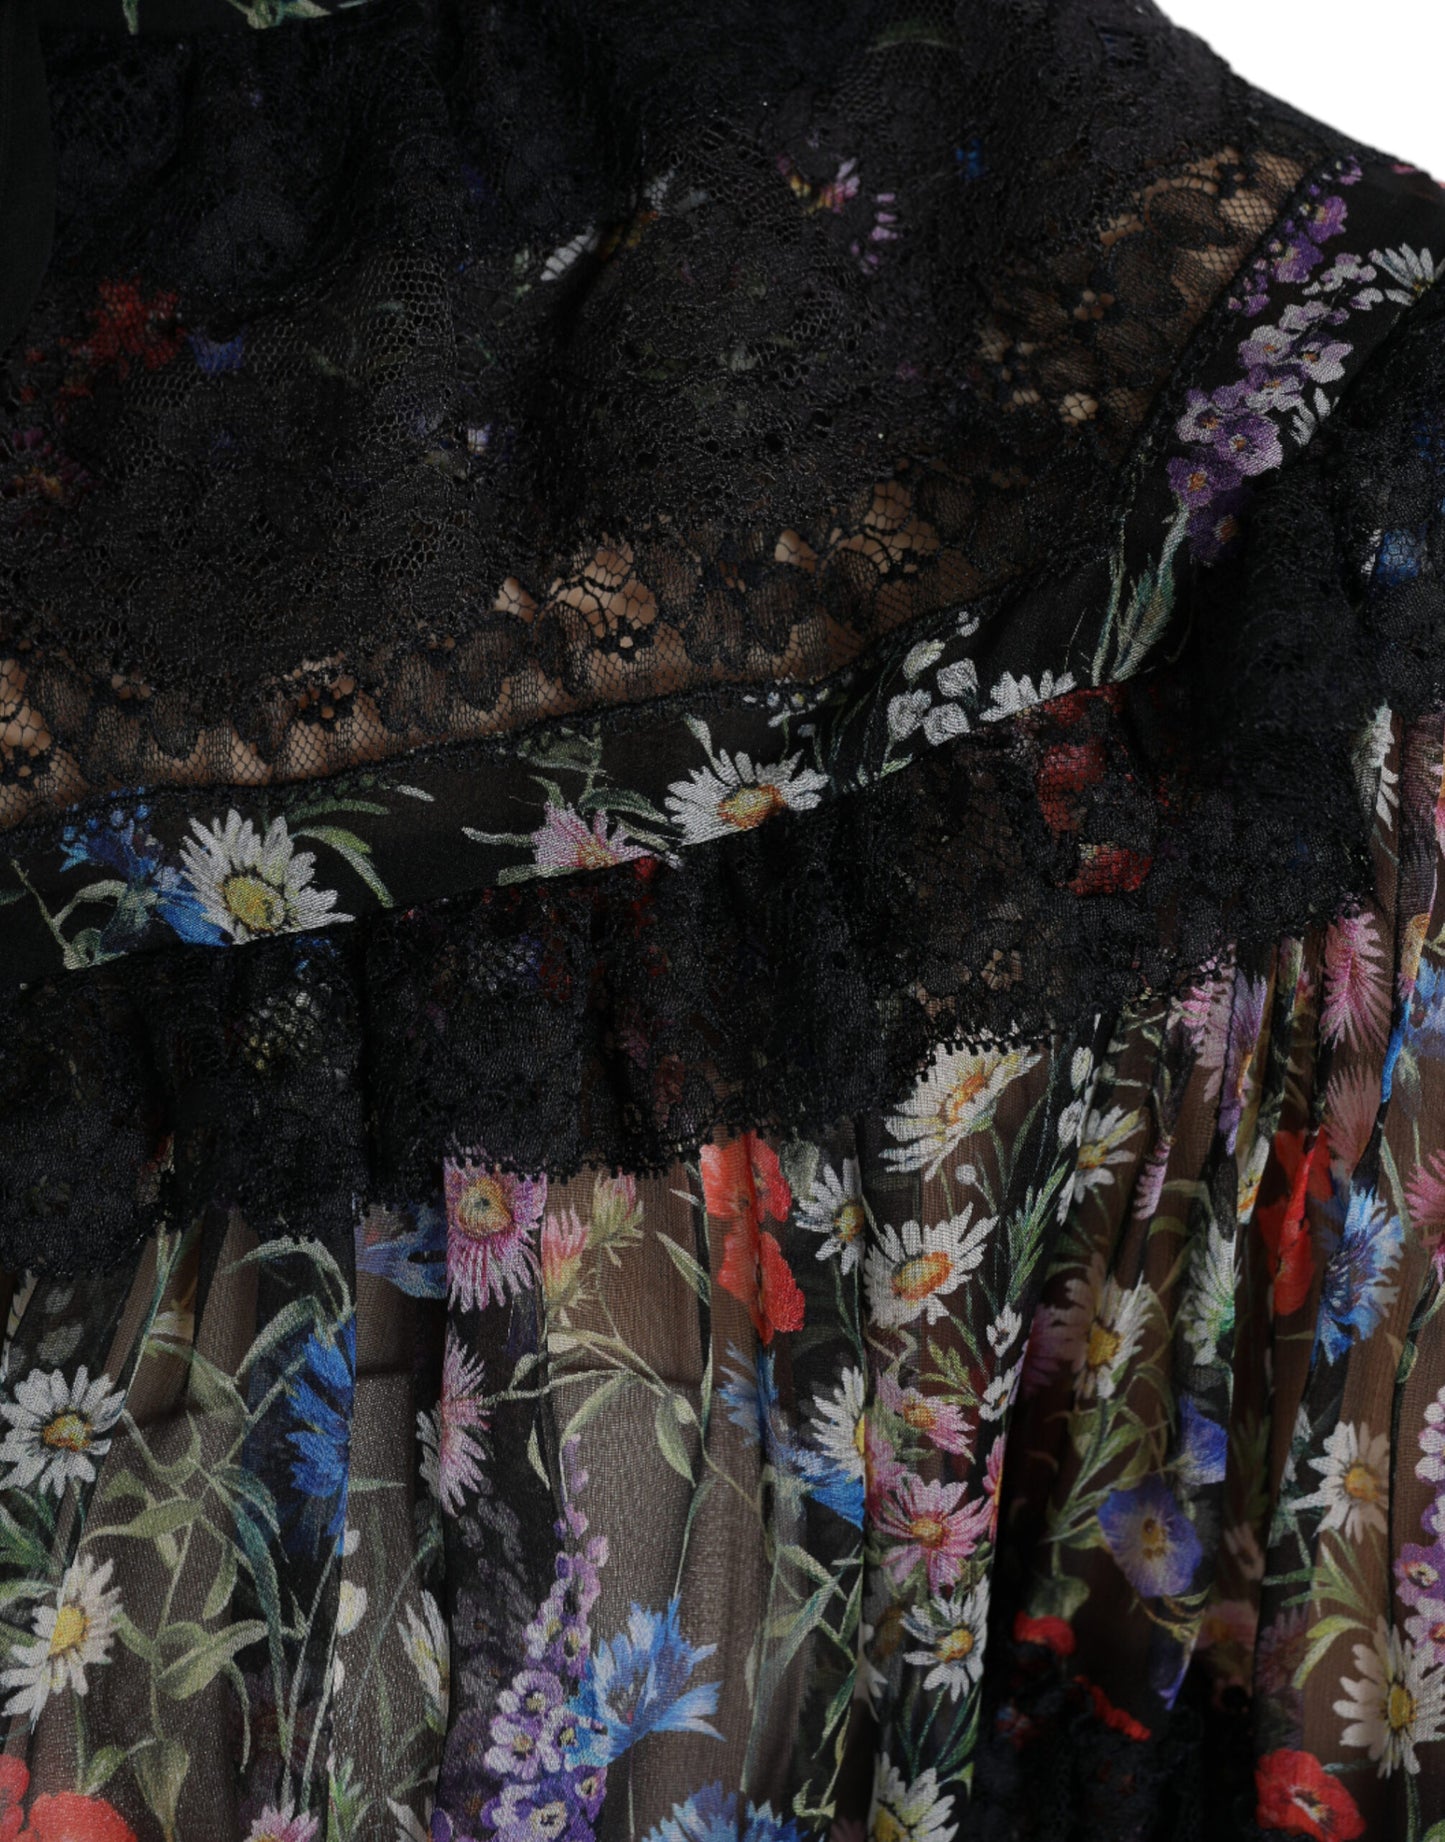 Elegant Floral Silk Blouse with Lace Trim